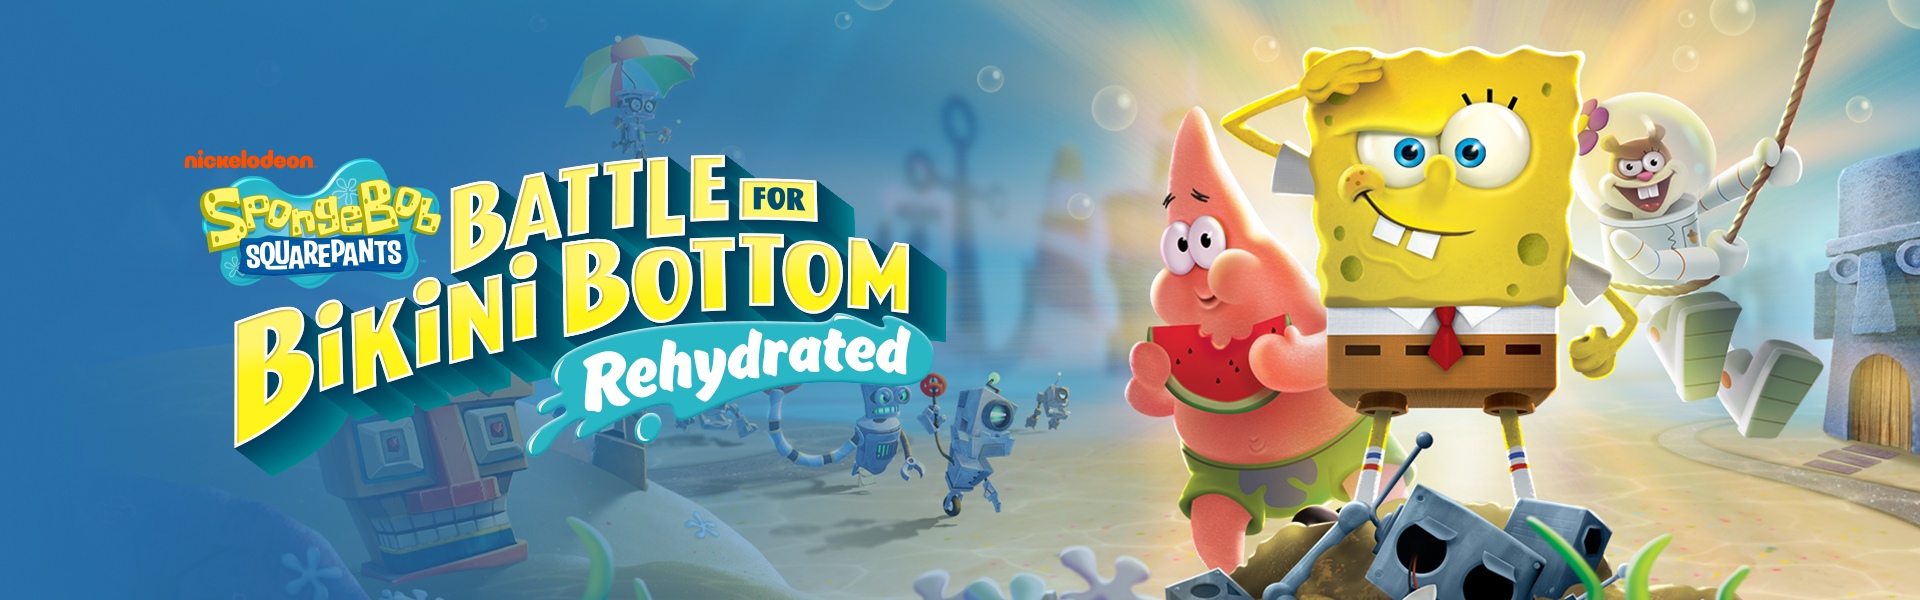 THQ GmbH Battle | SpongeBob Bottom Rehydrated SquarePants: Bikini - Nordic for